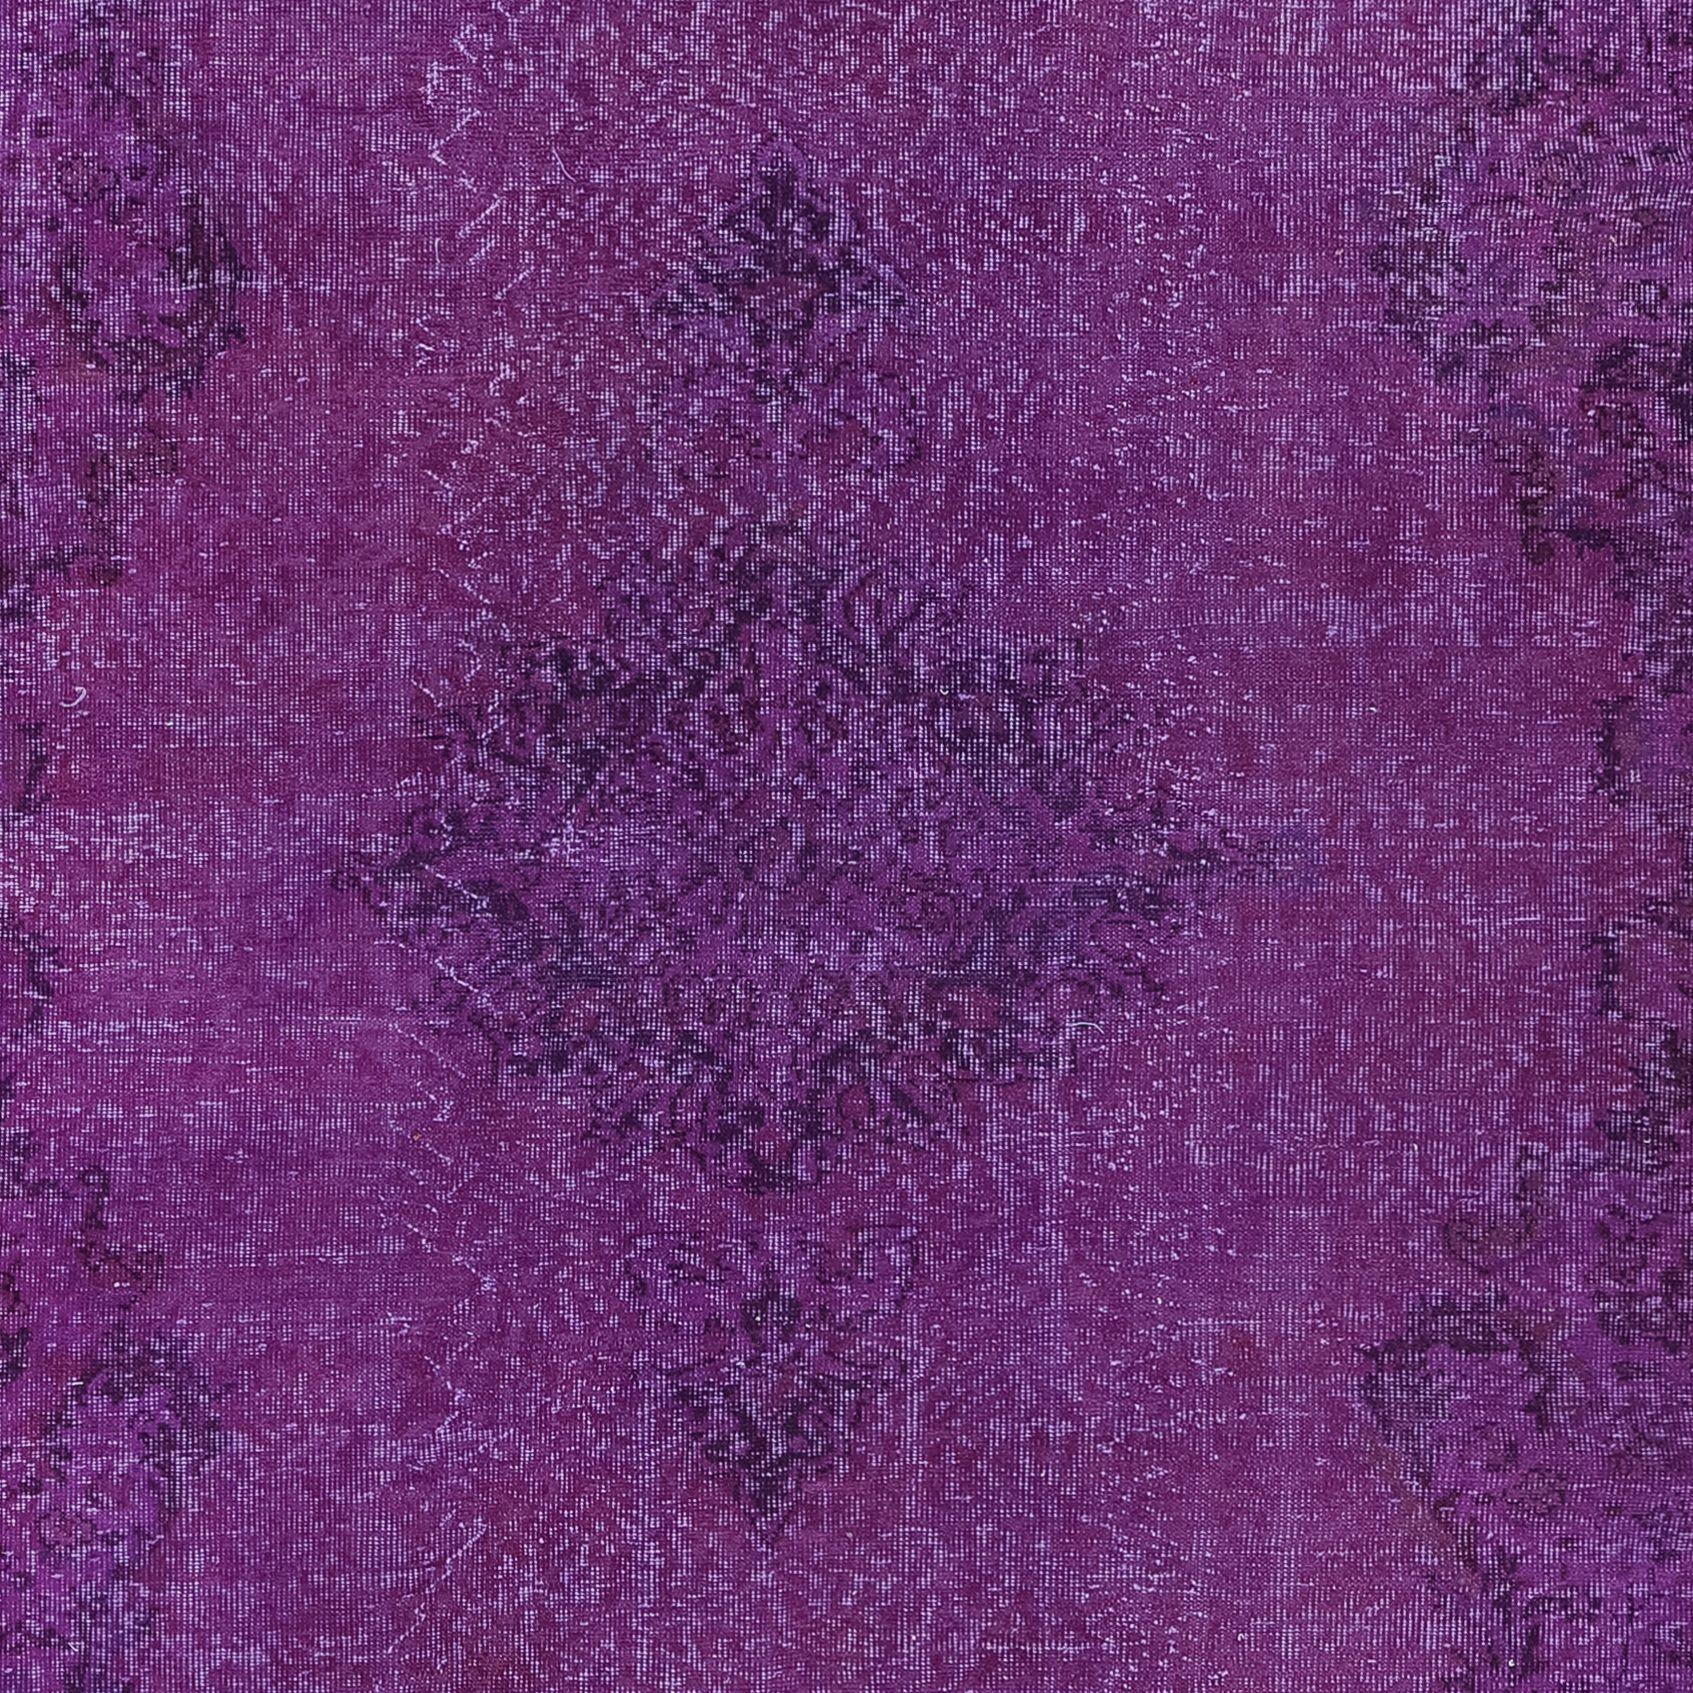 purple and orange rugs 7x10